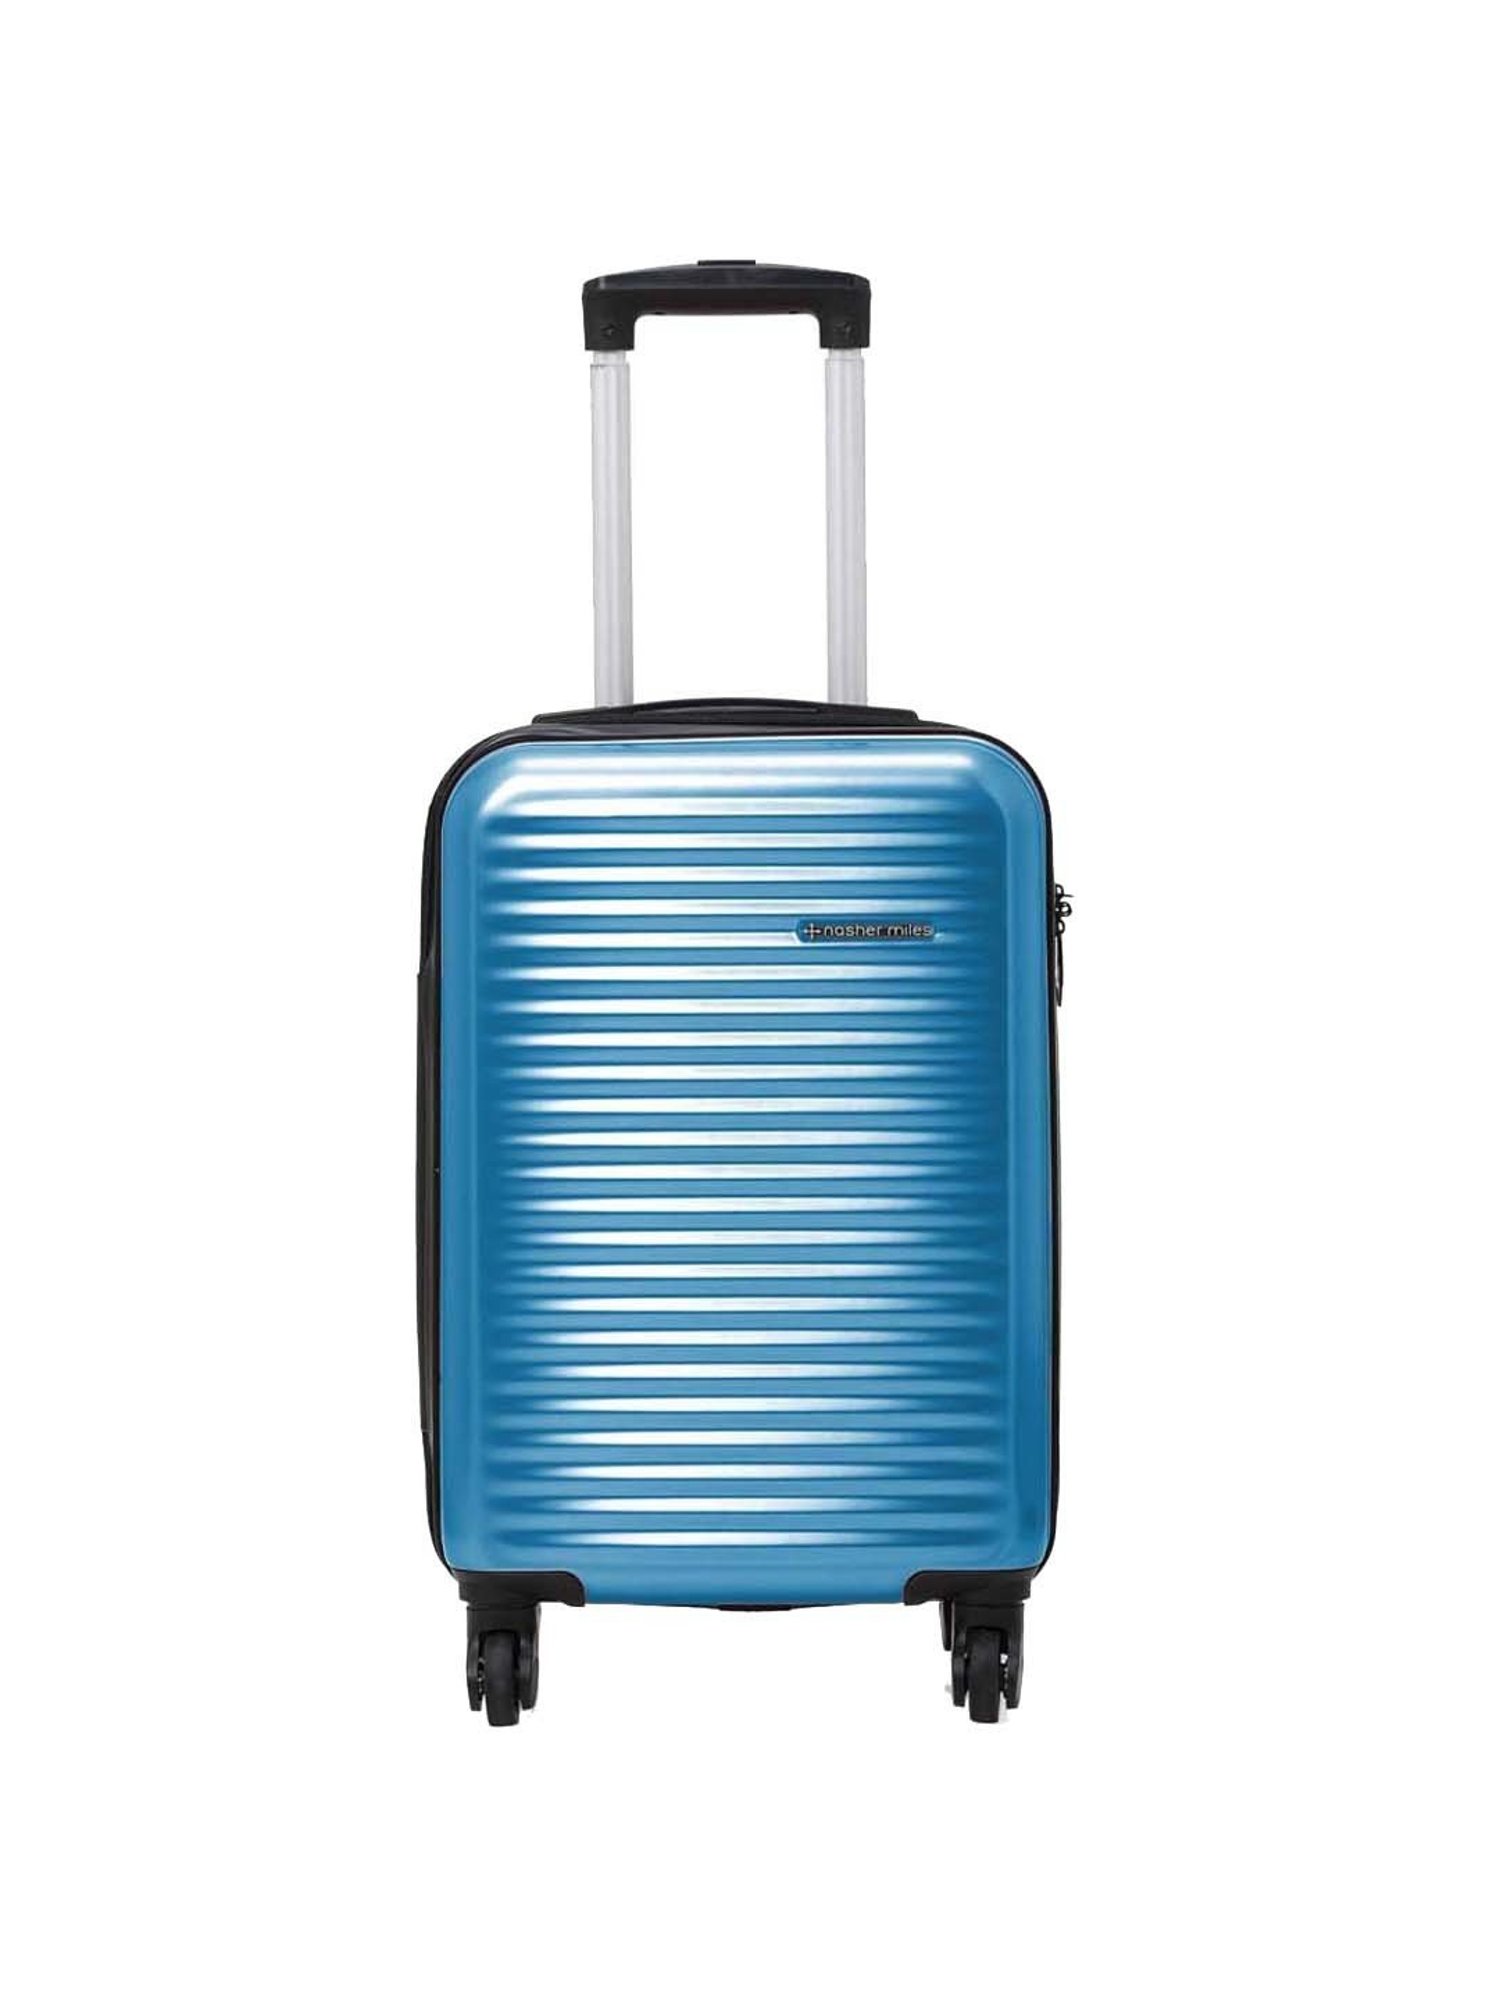 Nasher Miles London Expander Soft-Side Luggage Set of 2 Blue